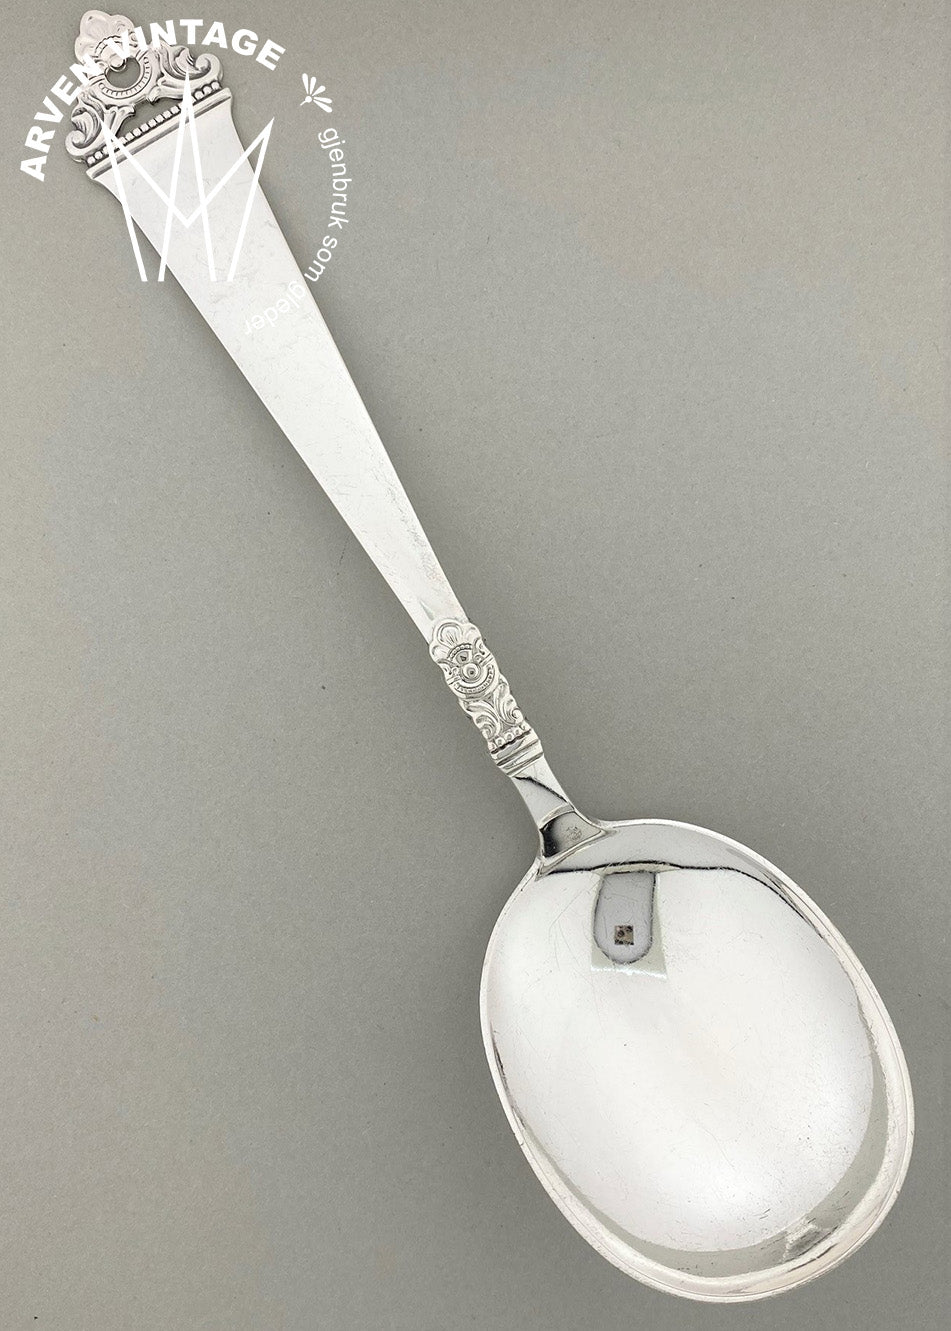 Vintage Odel potato spoon / serving spoon